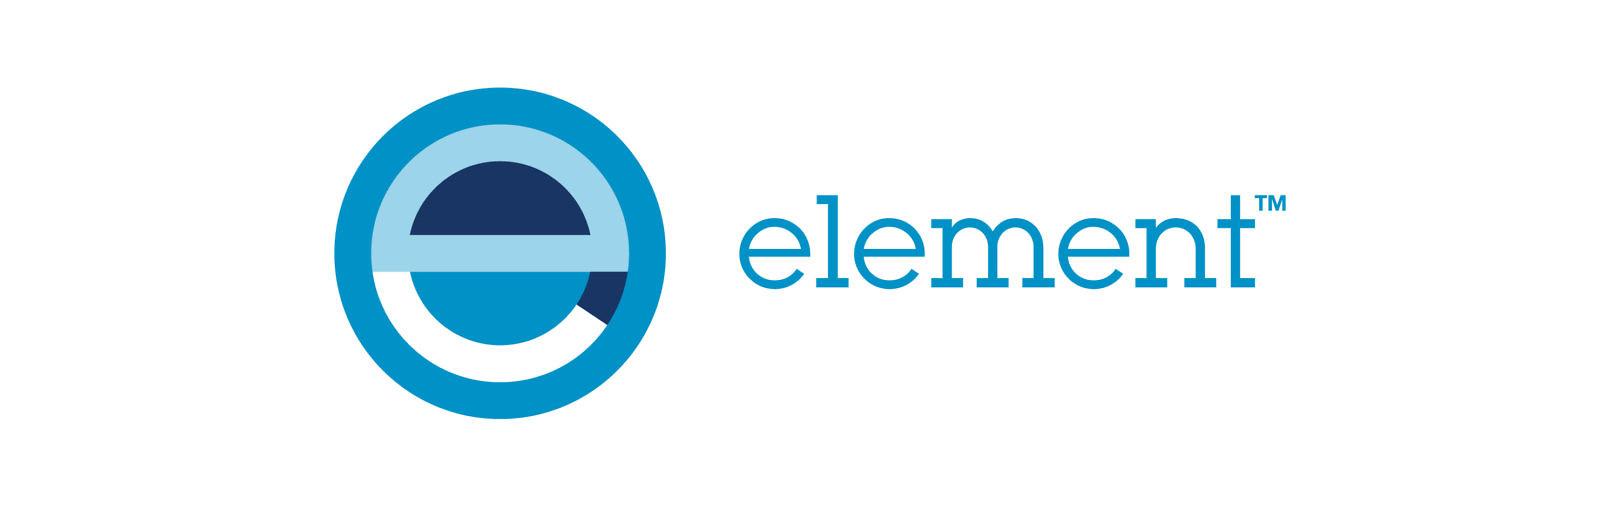 Old Element Logo - Element - Cue